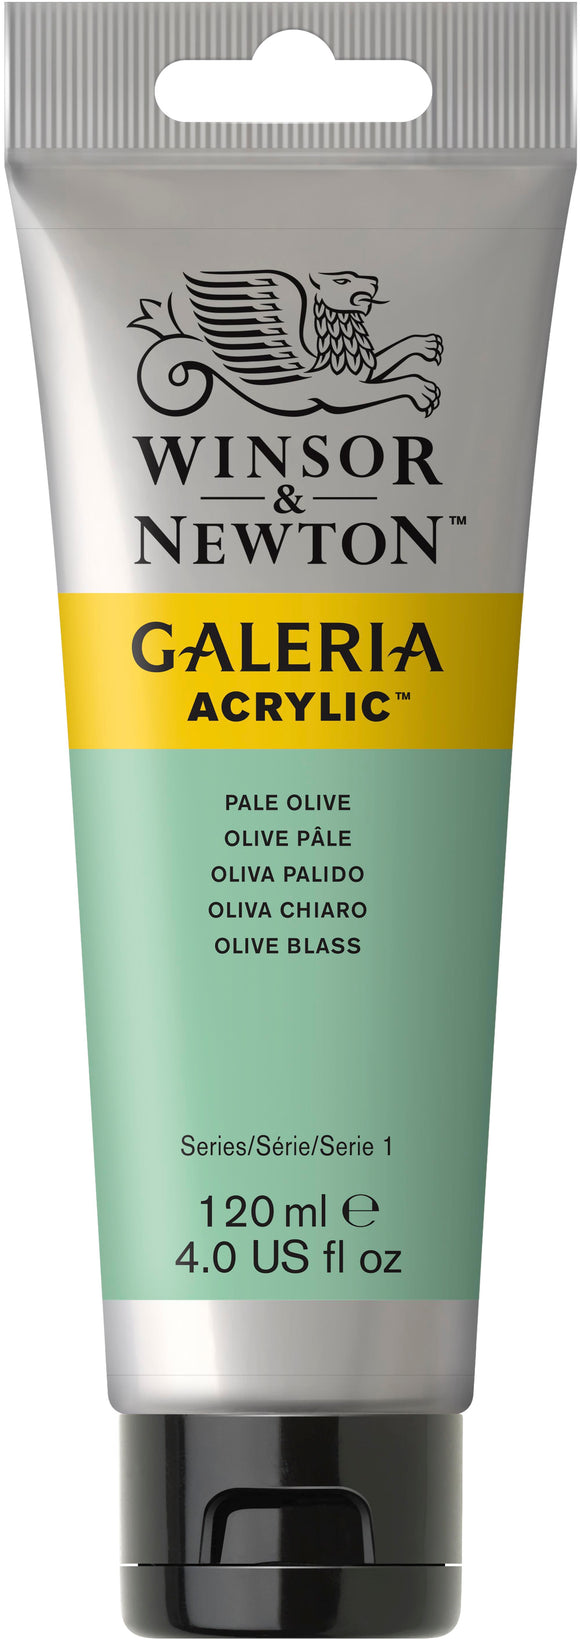 Winsor & Newton Galeria Acrylic Pale Olive 120Ml